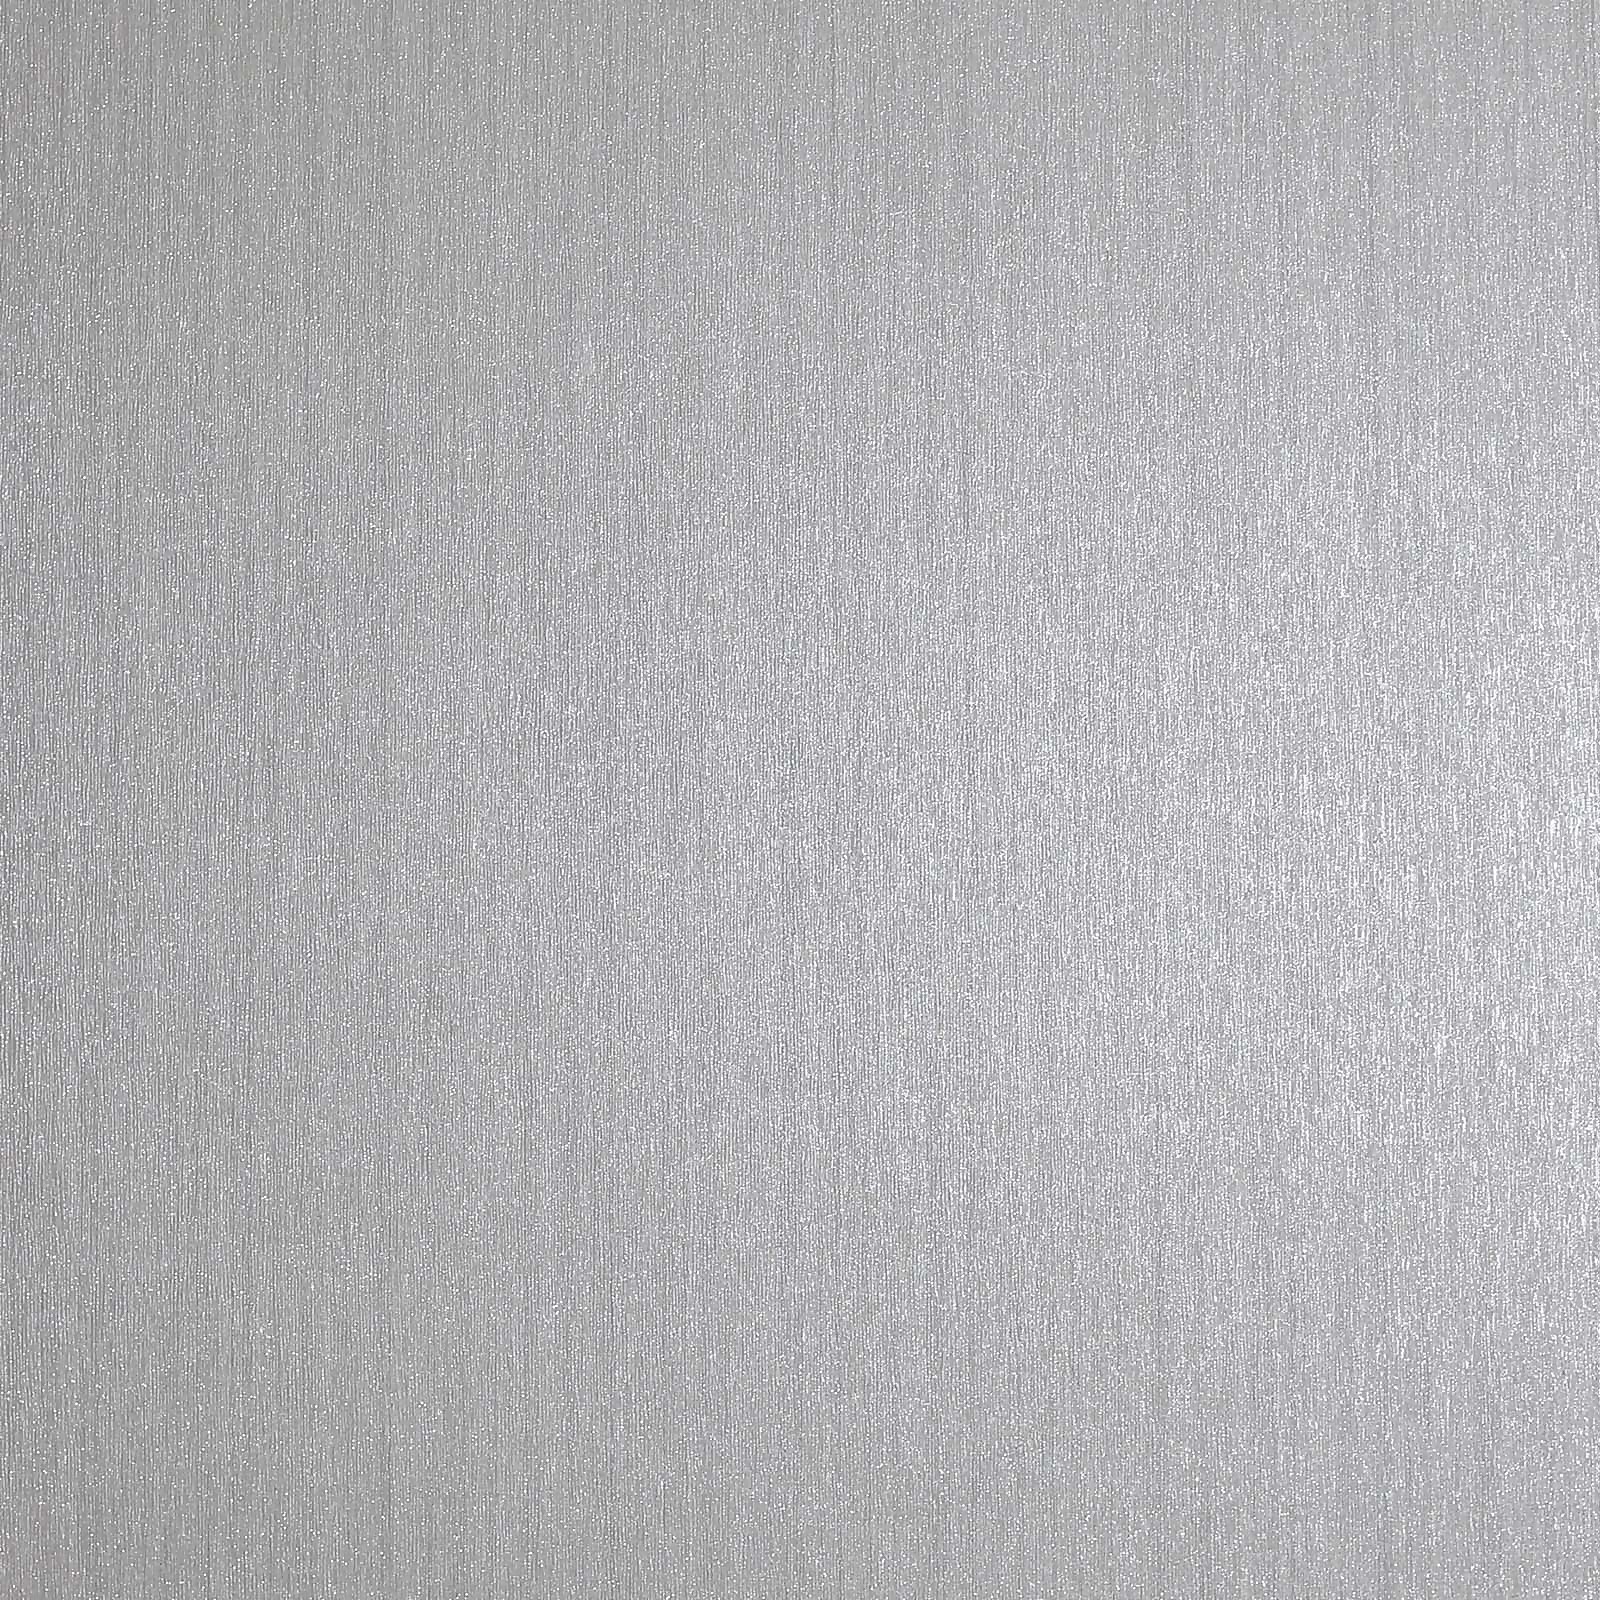 Photo of Arthouse Diamond Plain Textured Metallic Glitter Silver Wallpaper A4 Sample